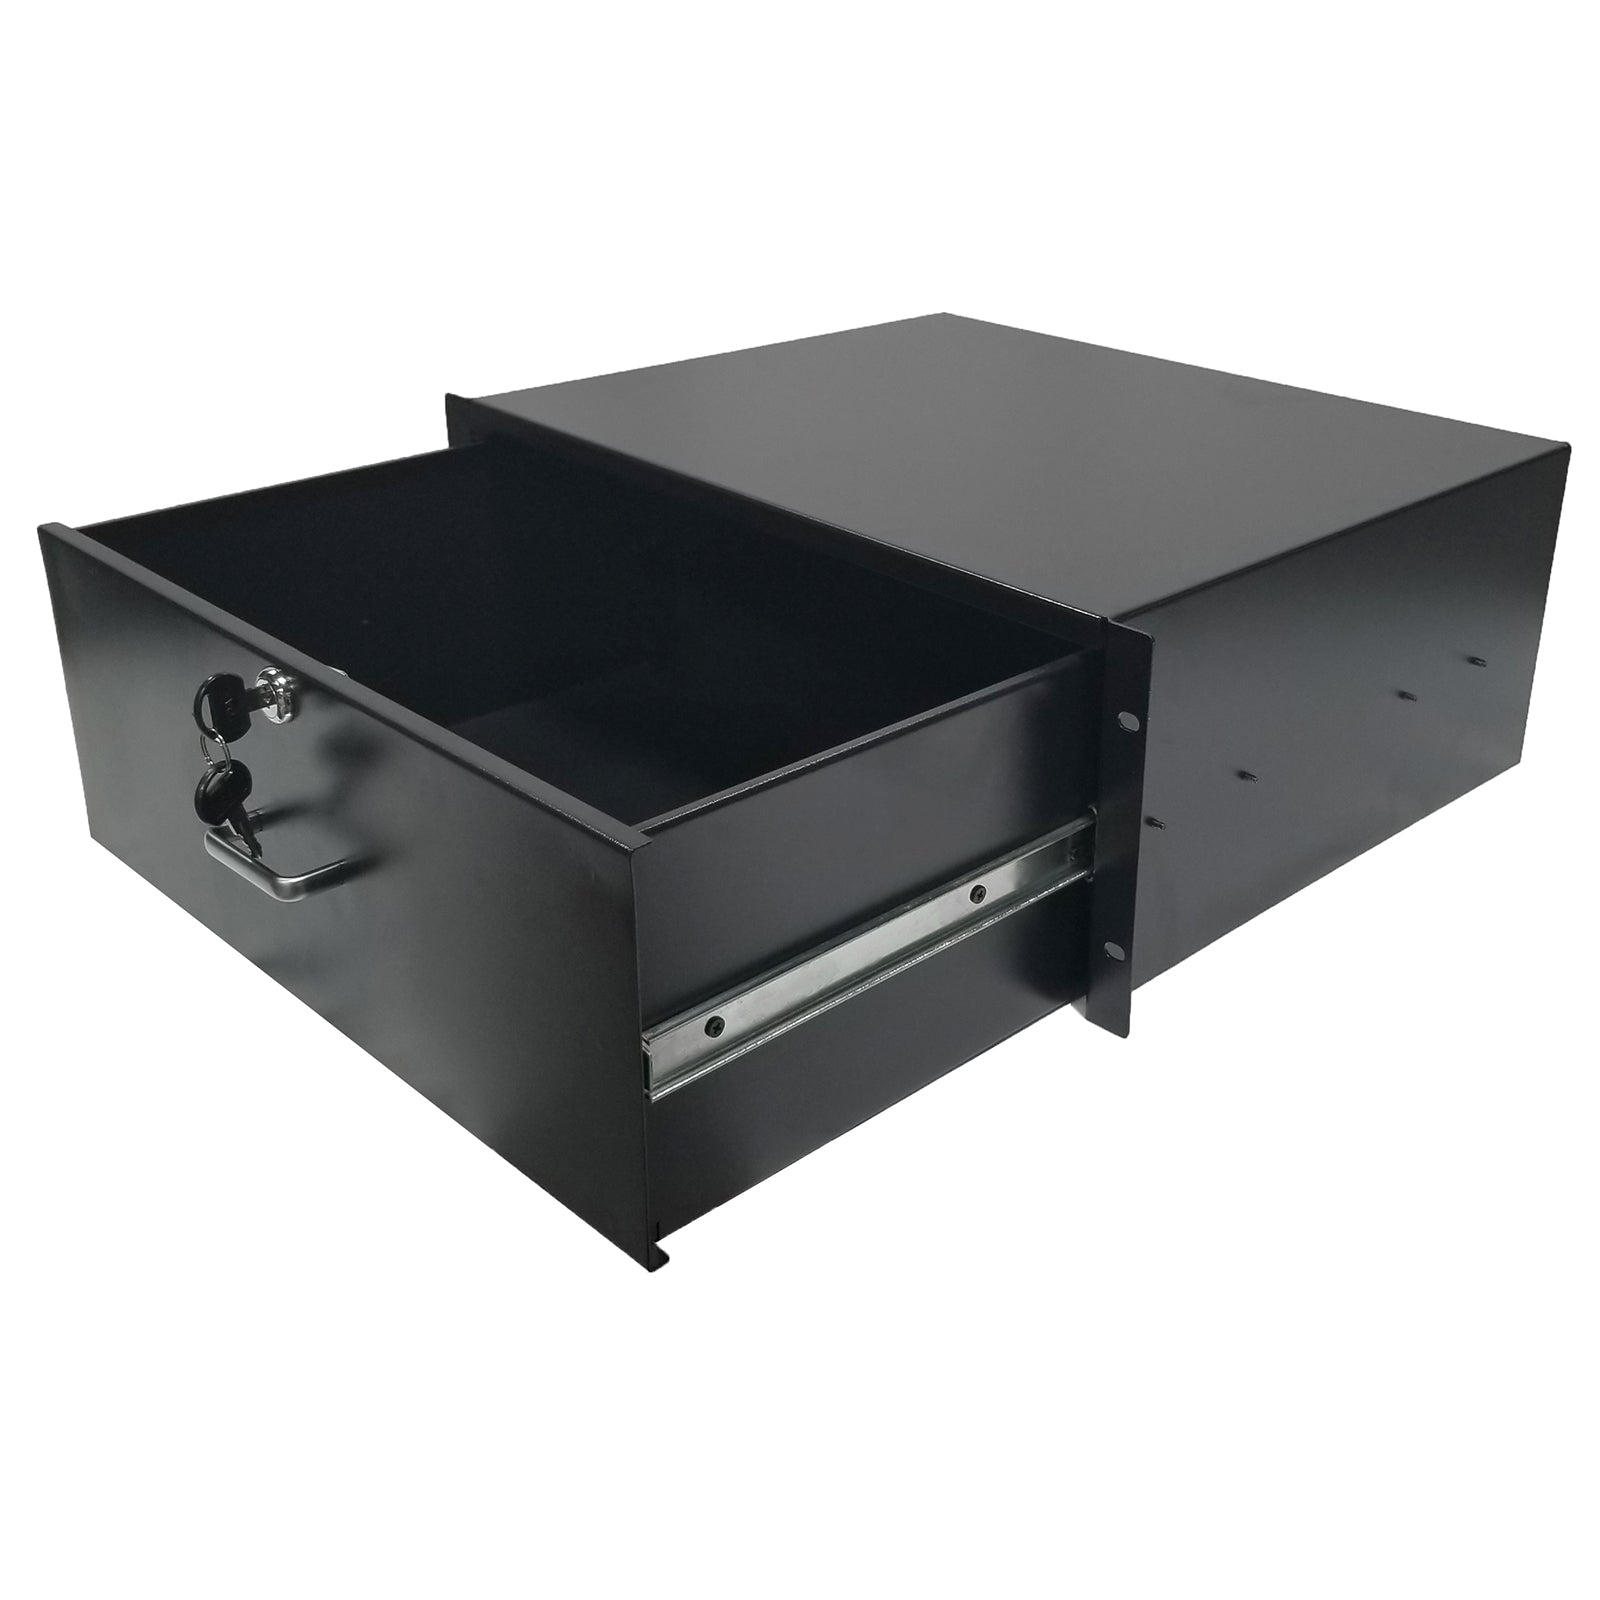 Aeons Premium 4U Rack Mount Sliding Drawer, Server Storage Cabinet Case with Lock